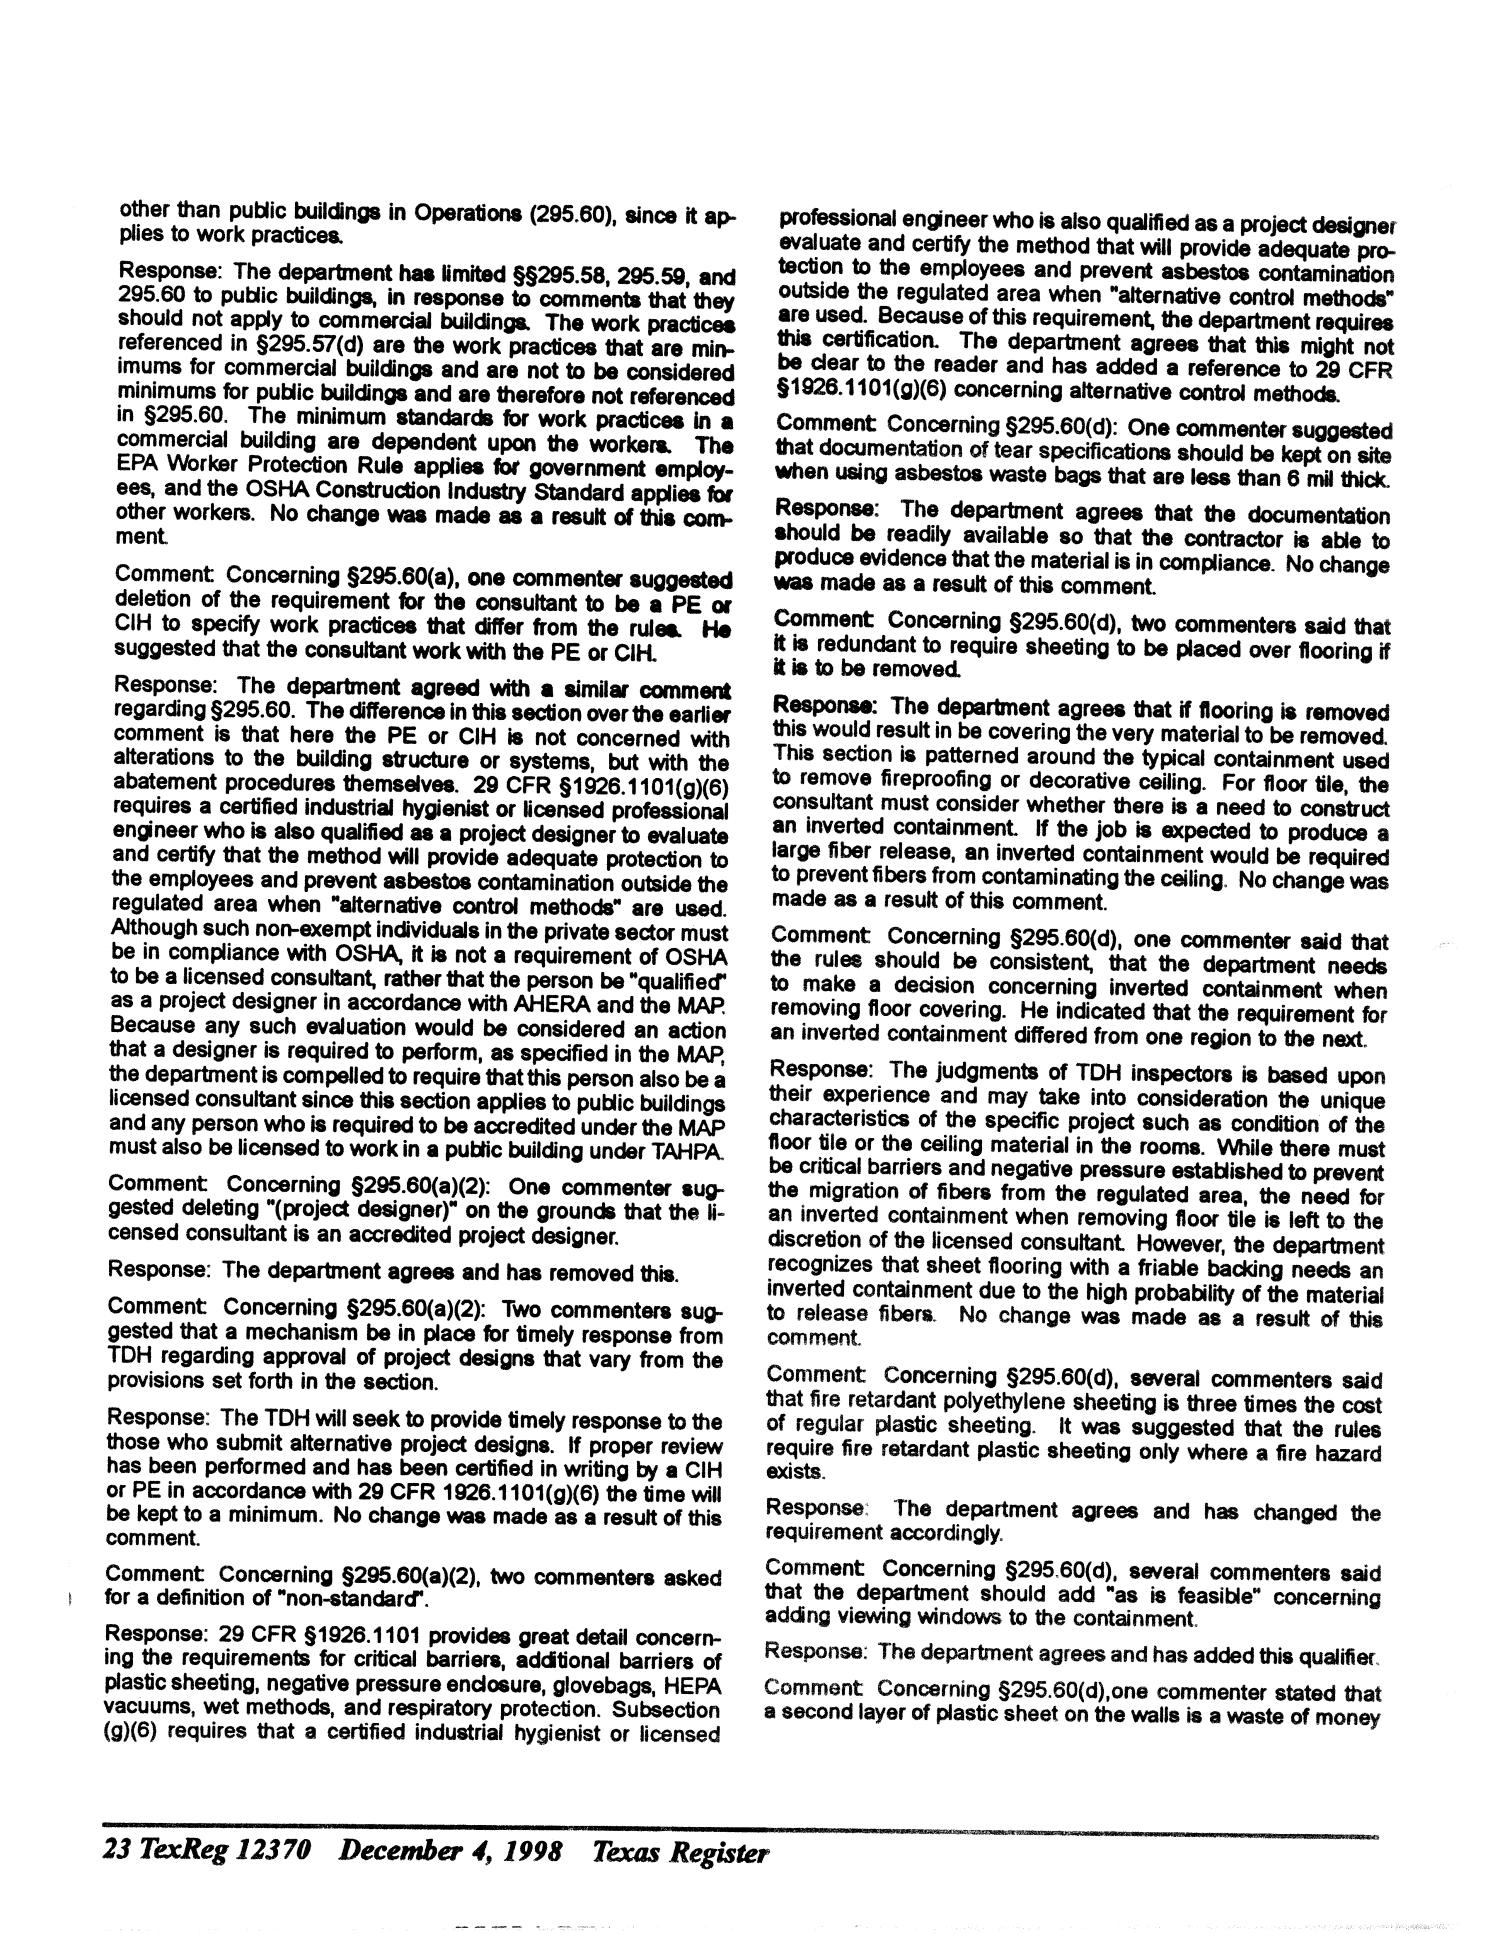 Texas Register, Volume 23, Number 49, Part III, Pages 12311-12450, December 4, 1998
                                                
                                                    12370
                                                